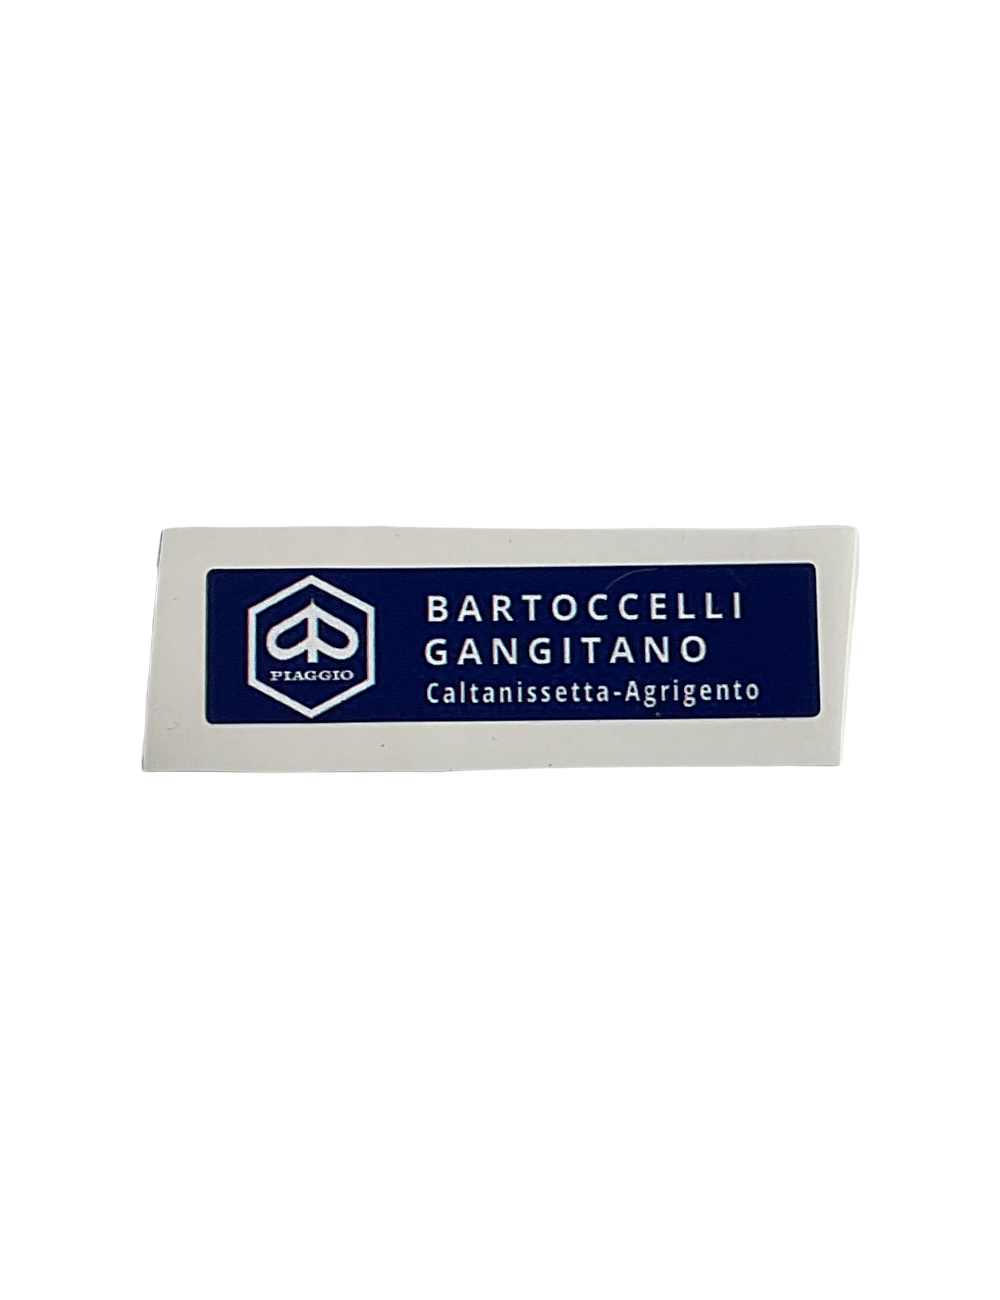 Adesivo concessionario Bartoccelli Gangitano. Caltanissetta Agrigento